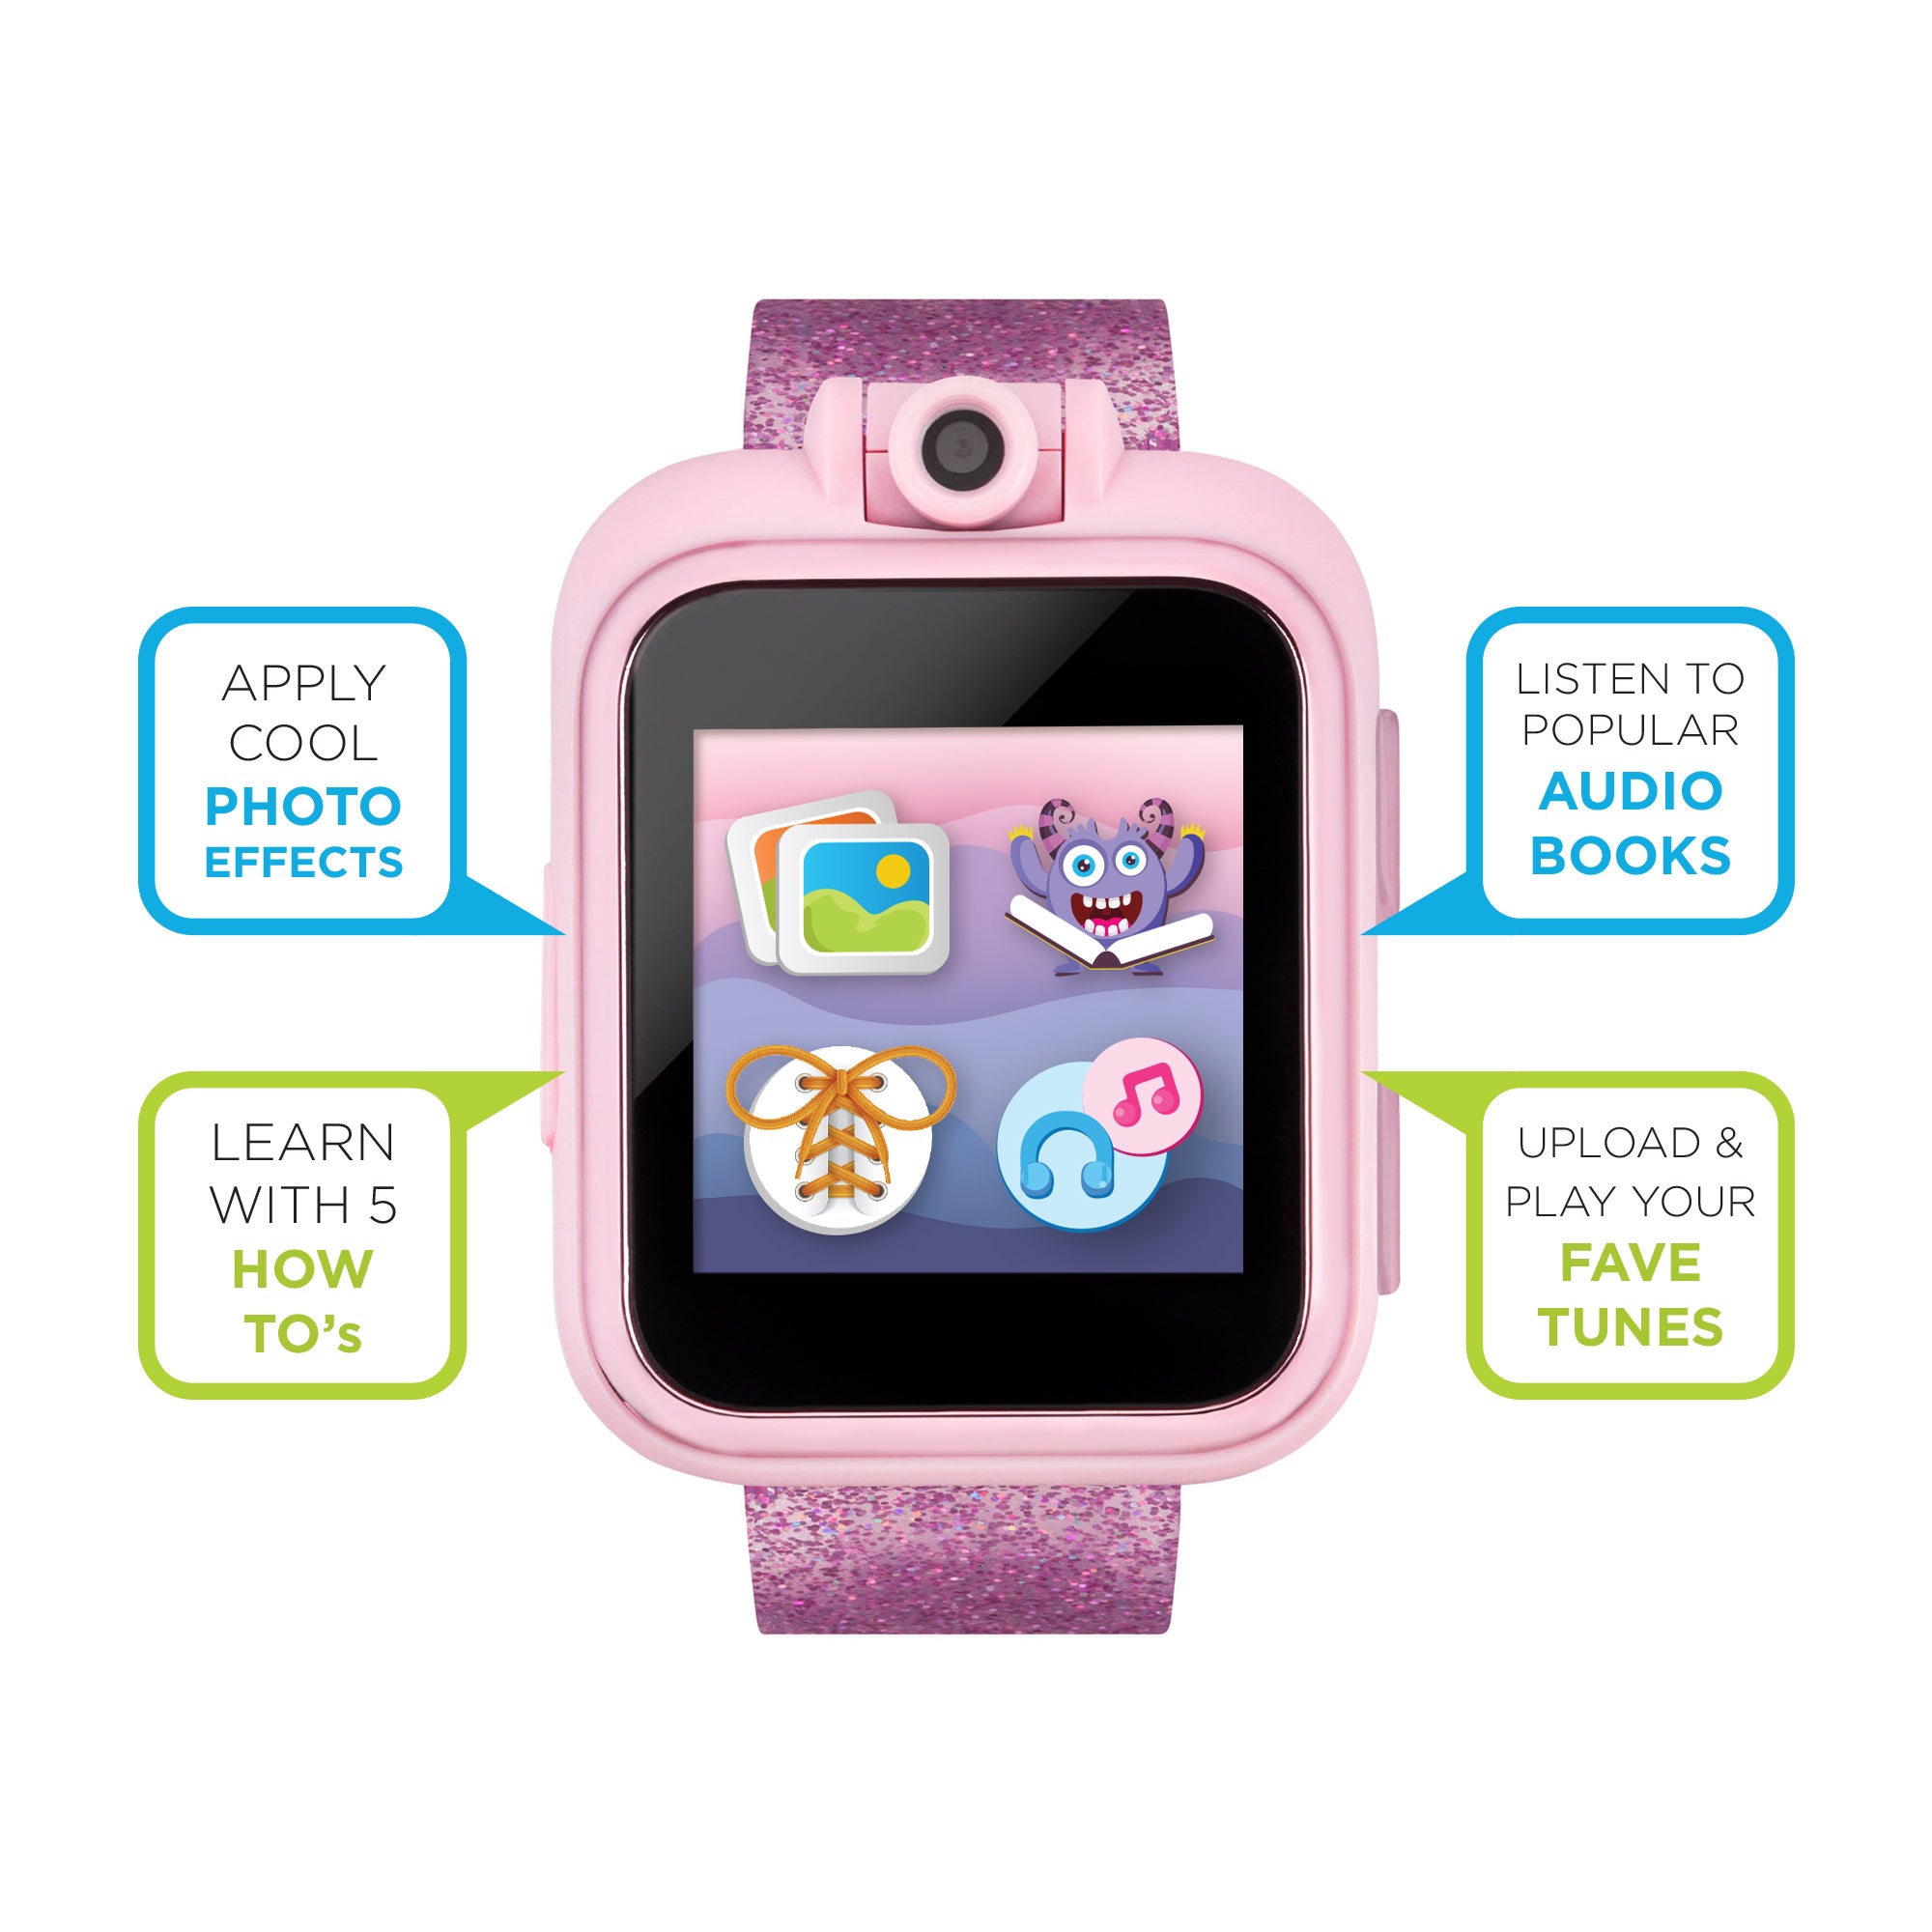 PlayZoom 2 Kids Smartwatch with Headphones: Pink Sparkle affordable smart watch with headphones